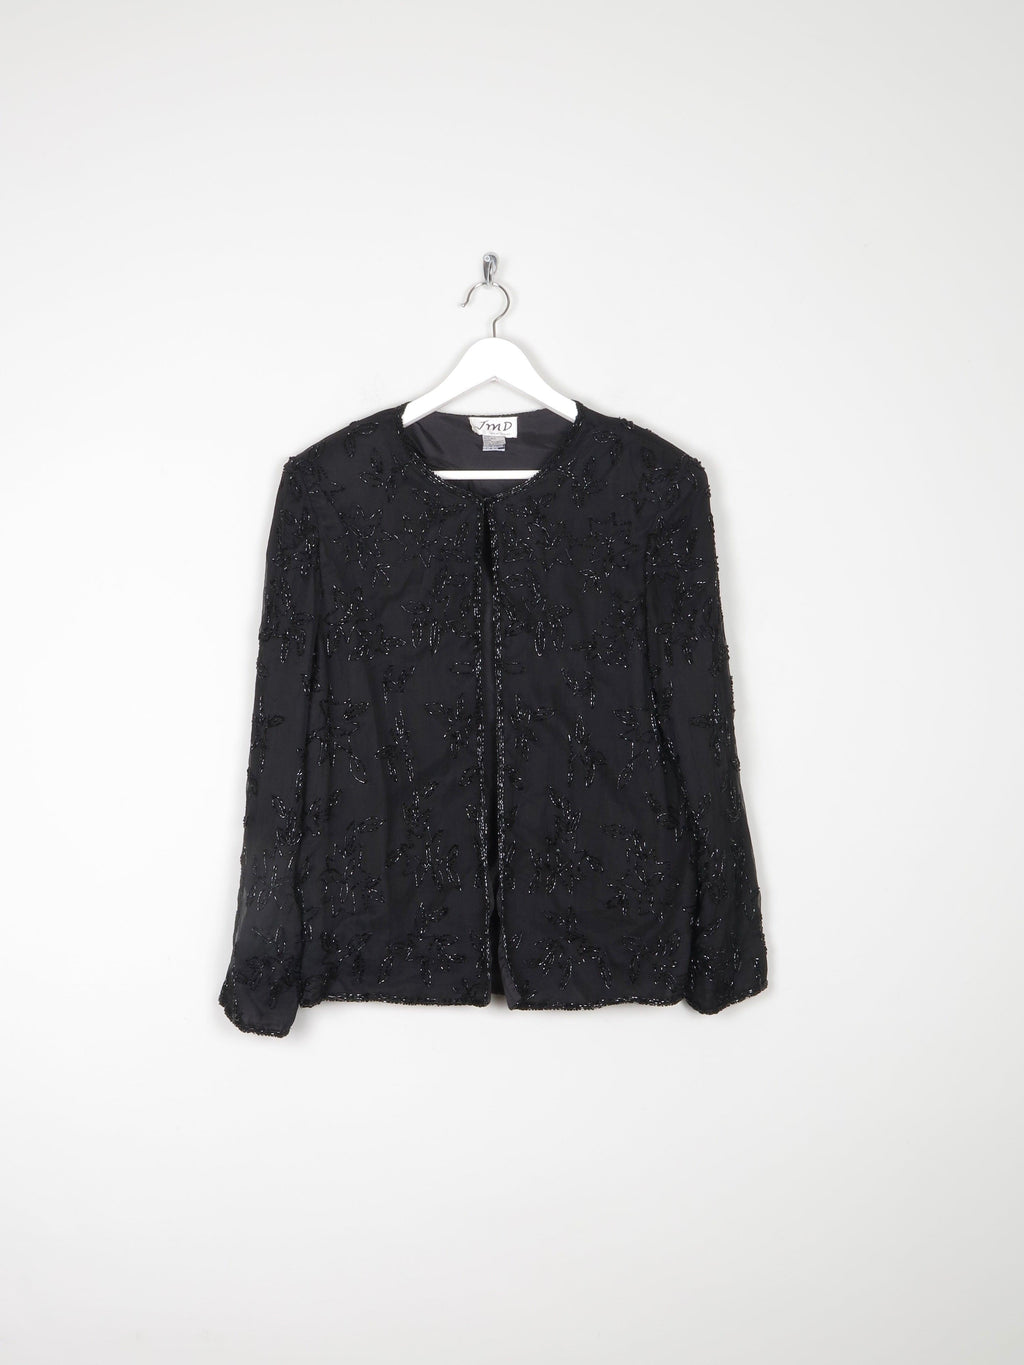 Women’s Black Vintage Beaded Jacket M - The Harlequin